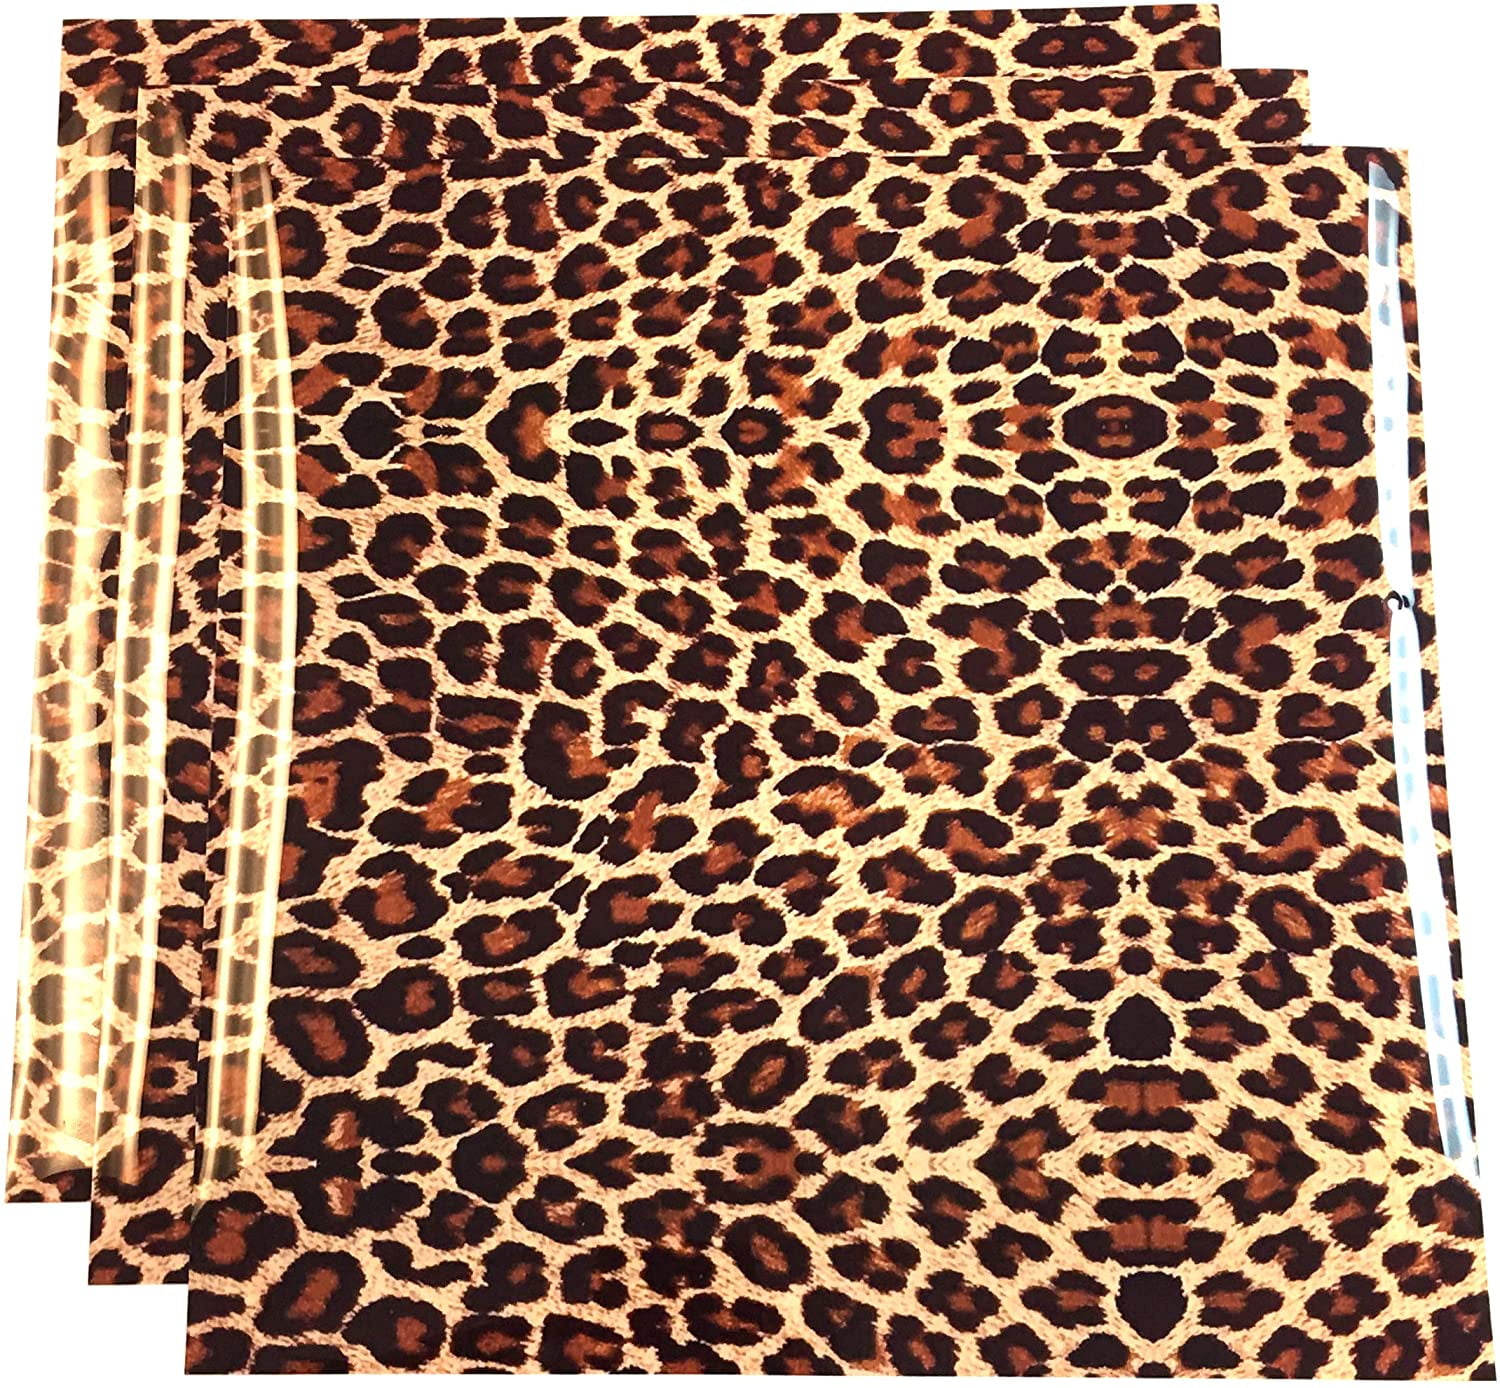 Leopard Thermoflex Fashion Patterns 12" x 12" (3 Sheets), Iron on Heat Transfer Vinyl, HTV